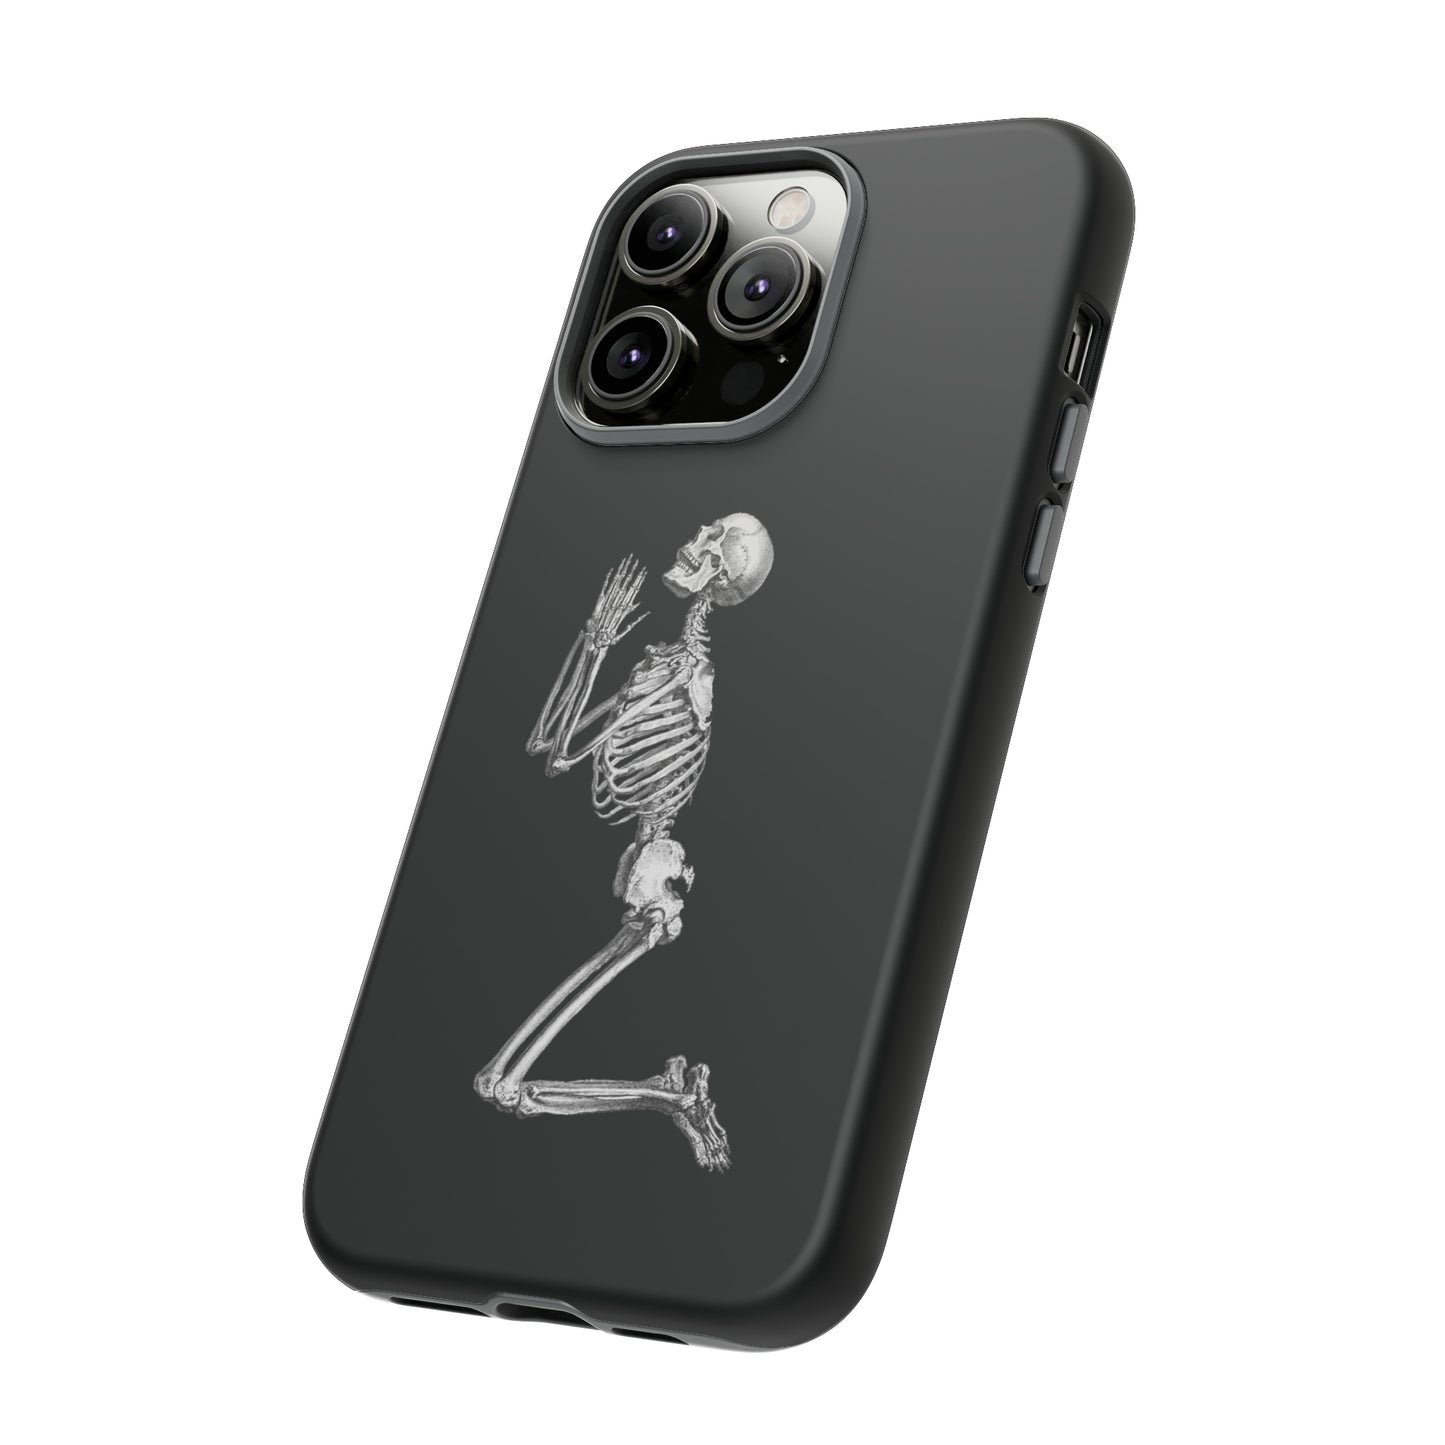 iPhone Case: Spooky Season